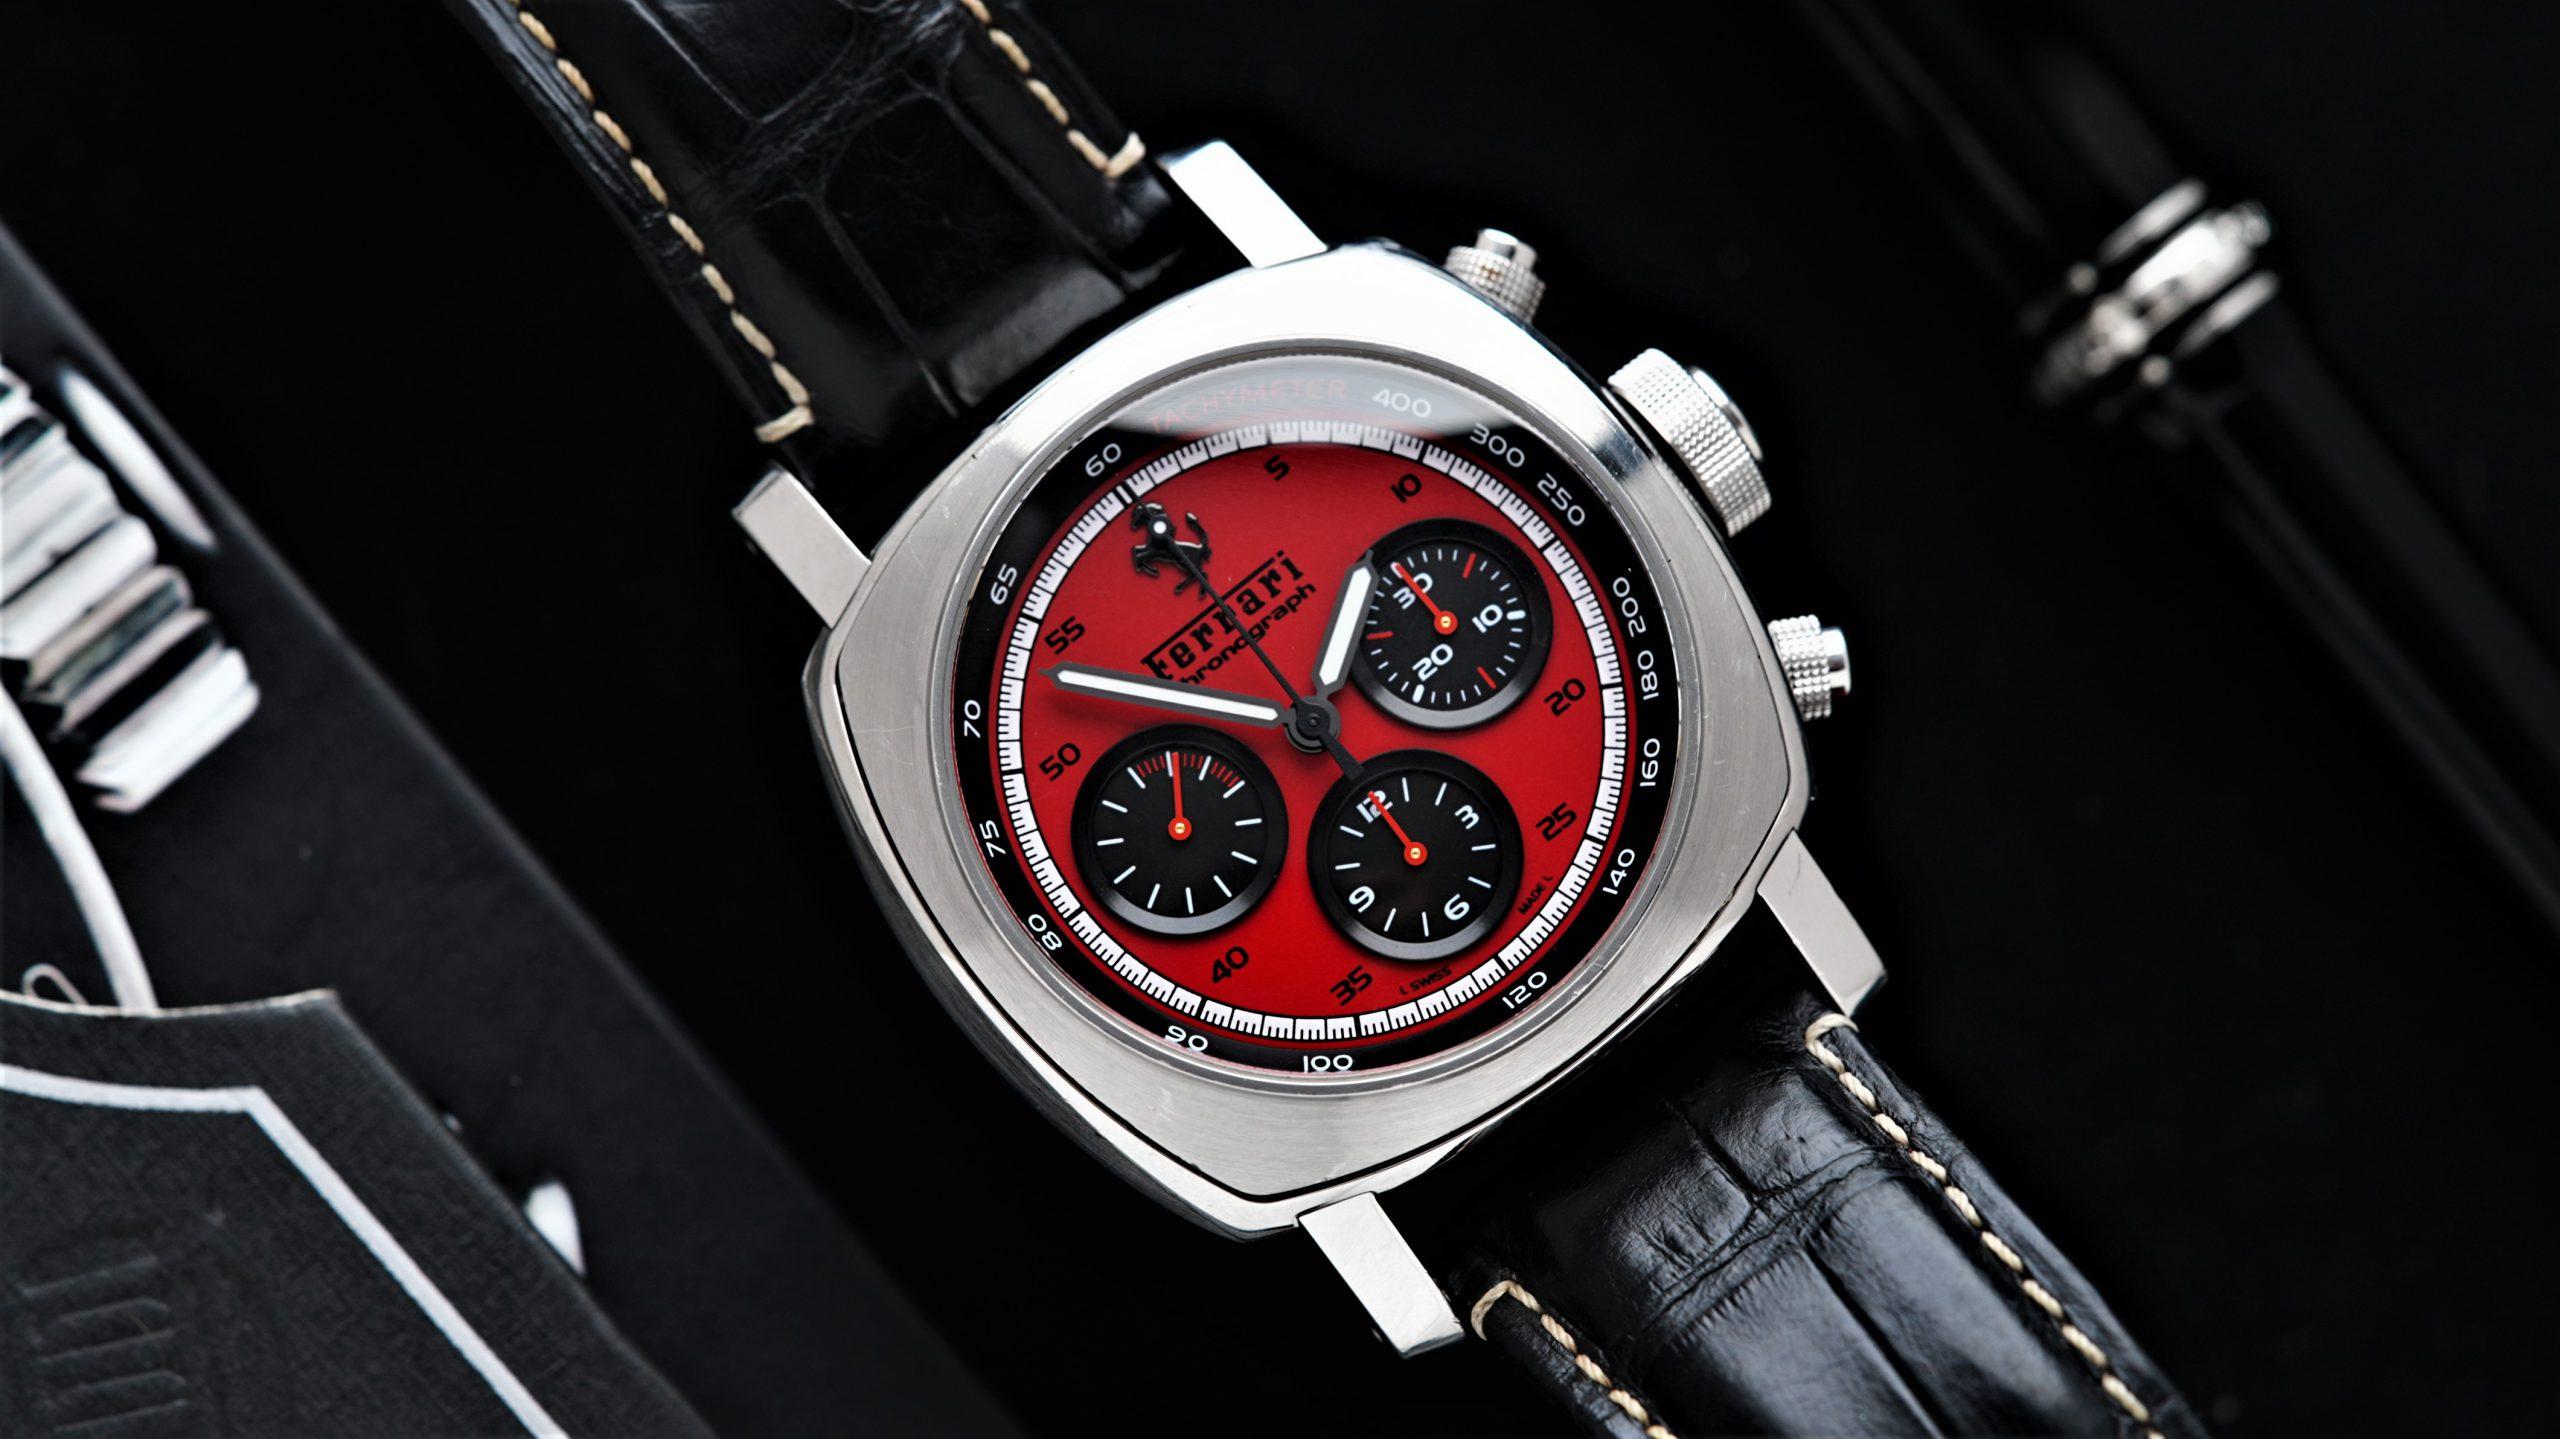 Panerai Ferrari chronograph watch featured on an angle under white light.